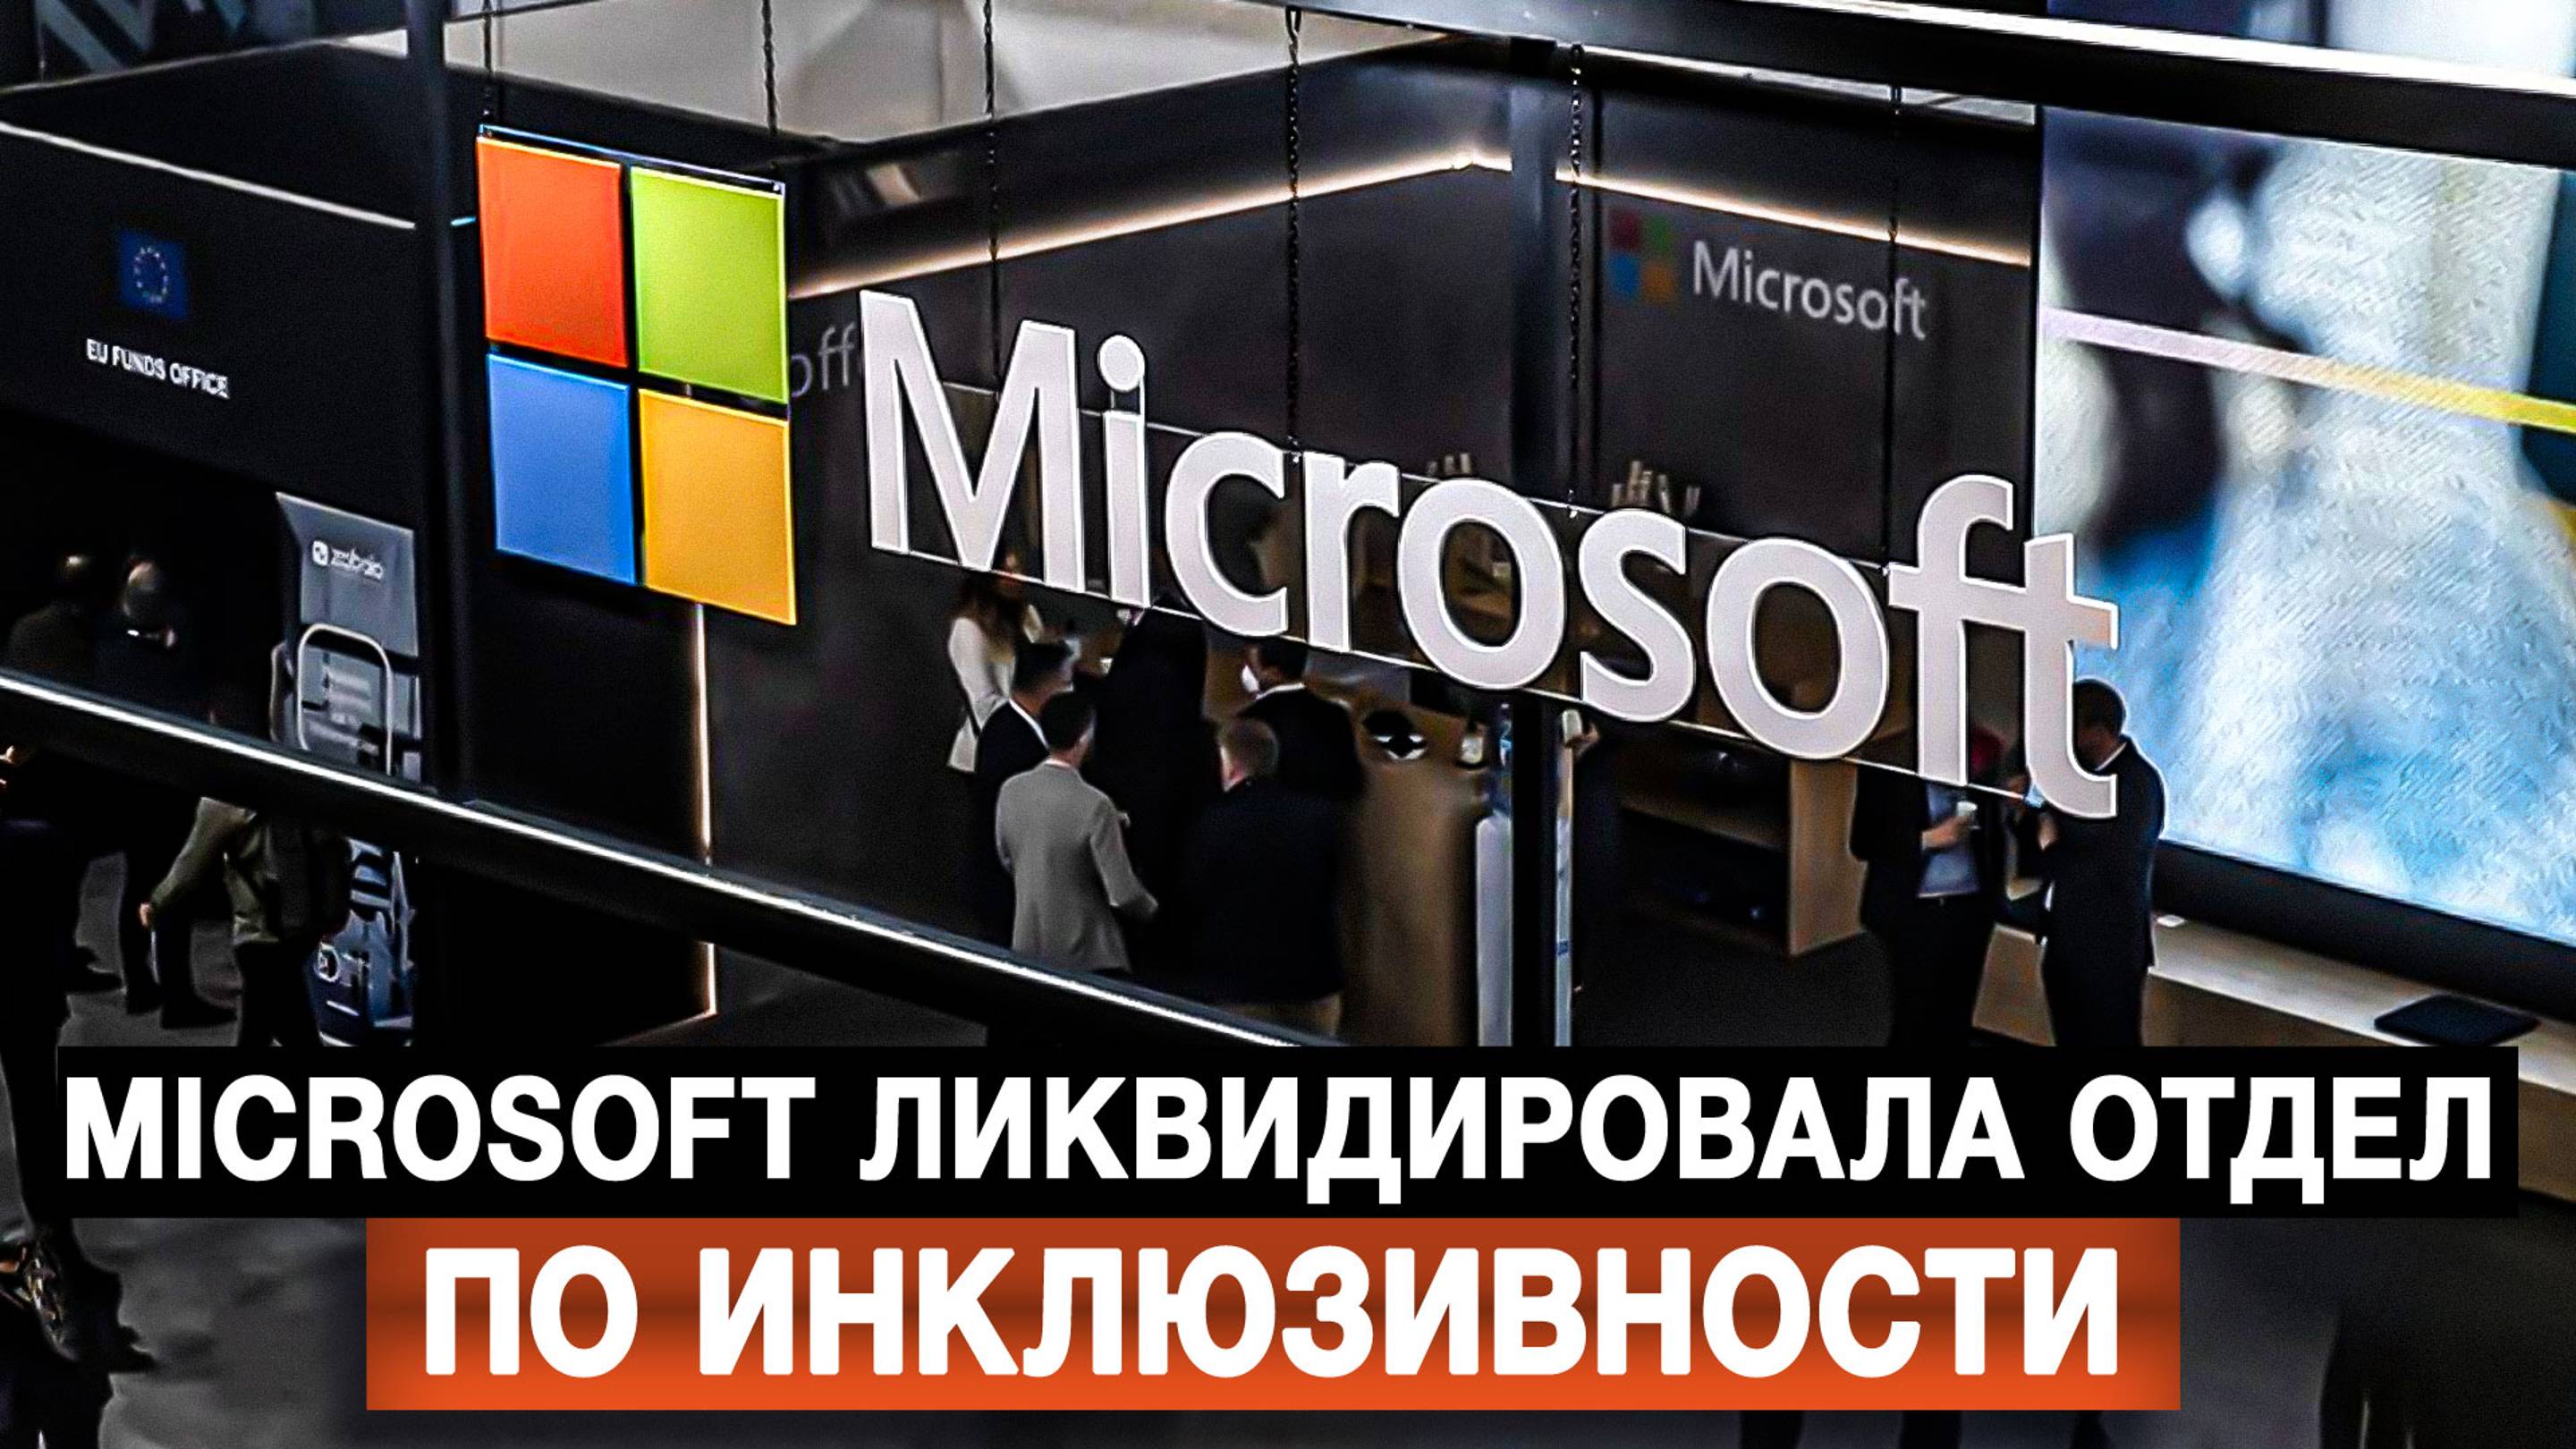 Microsoft ликвидировала отдел по инклюзивности